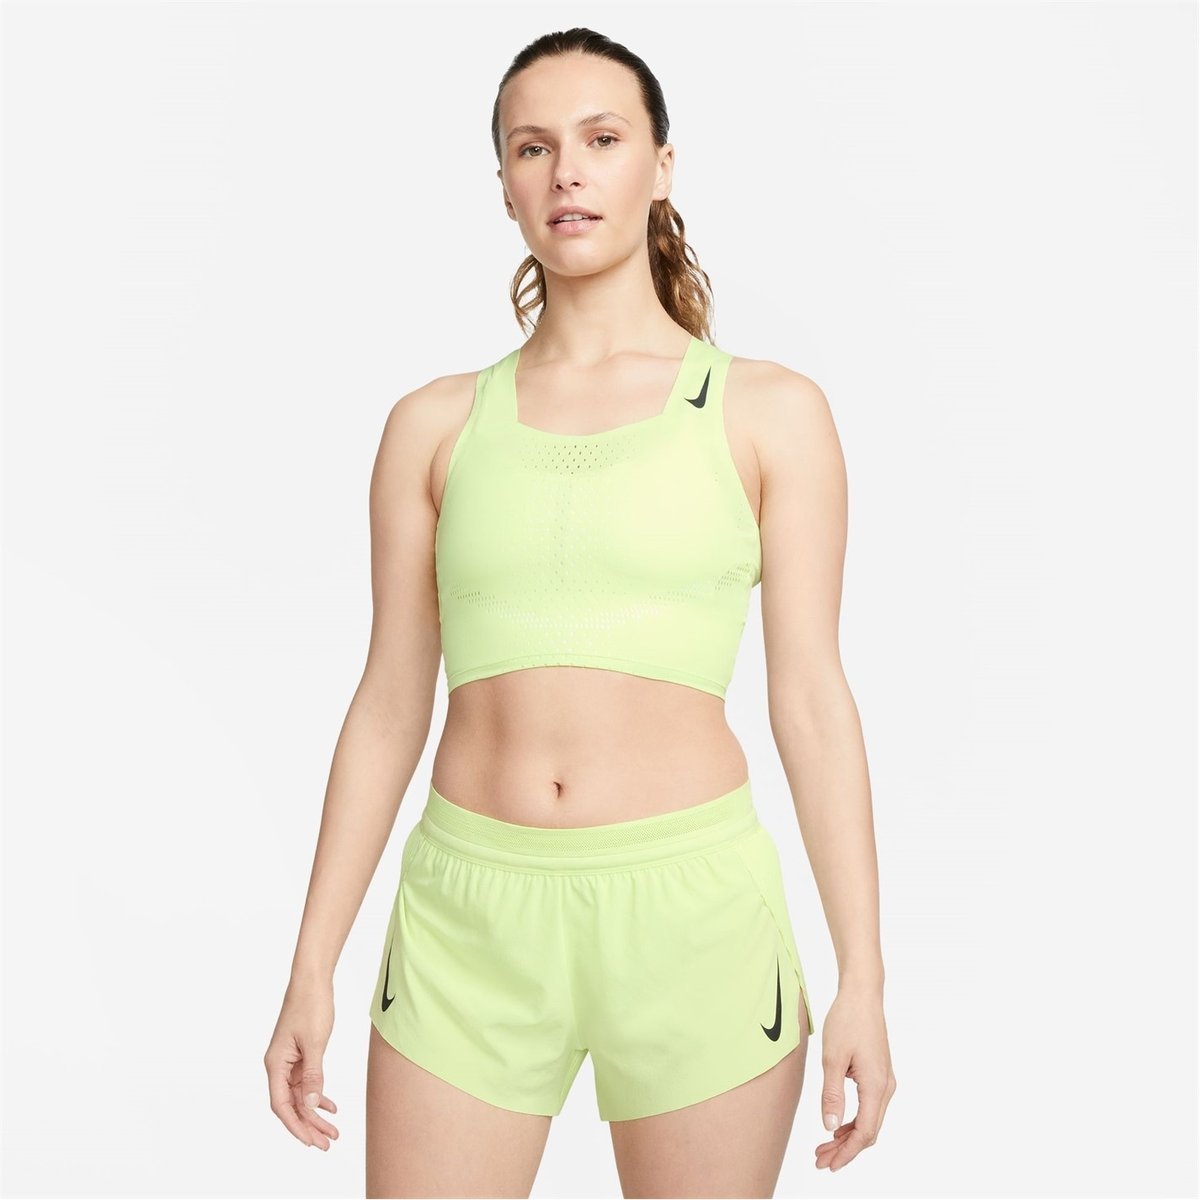 Nike Running Womens Athletic Capris Pants Aqua Blue Small Yoga Exercise Dri  Fit